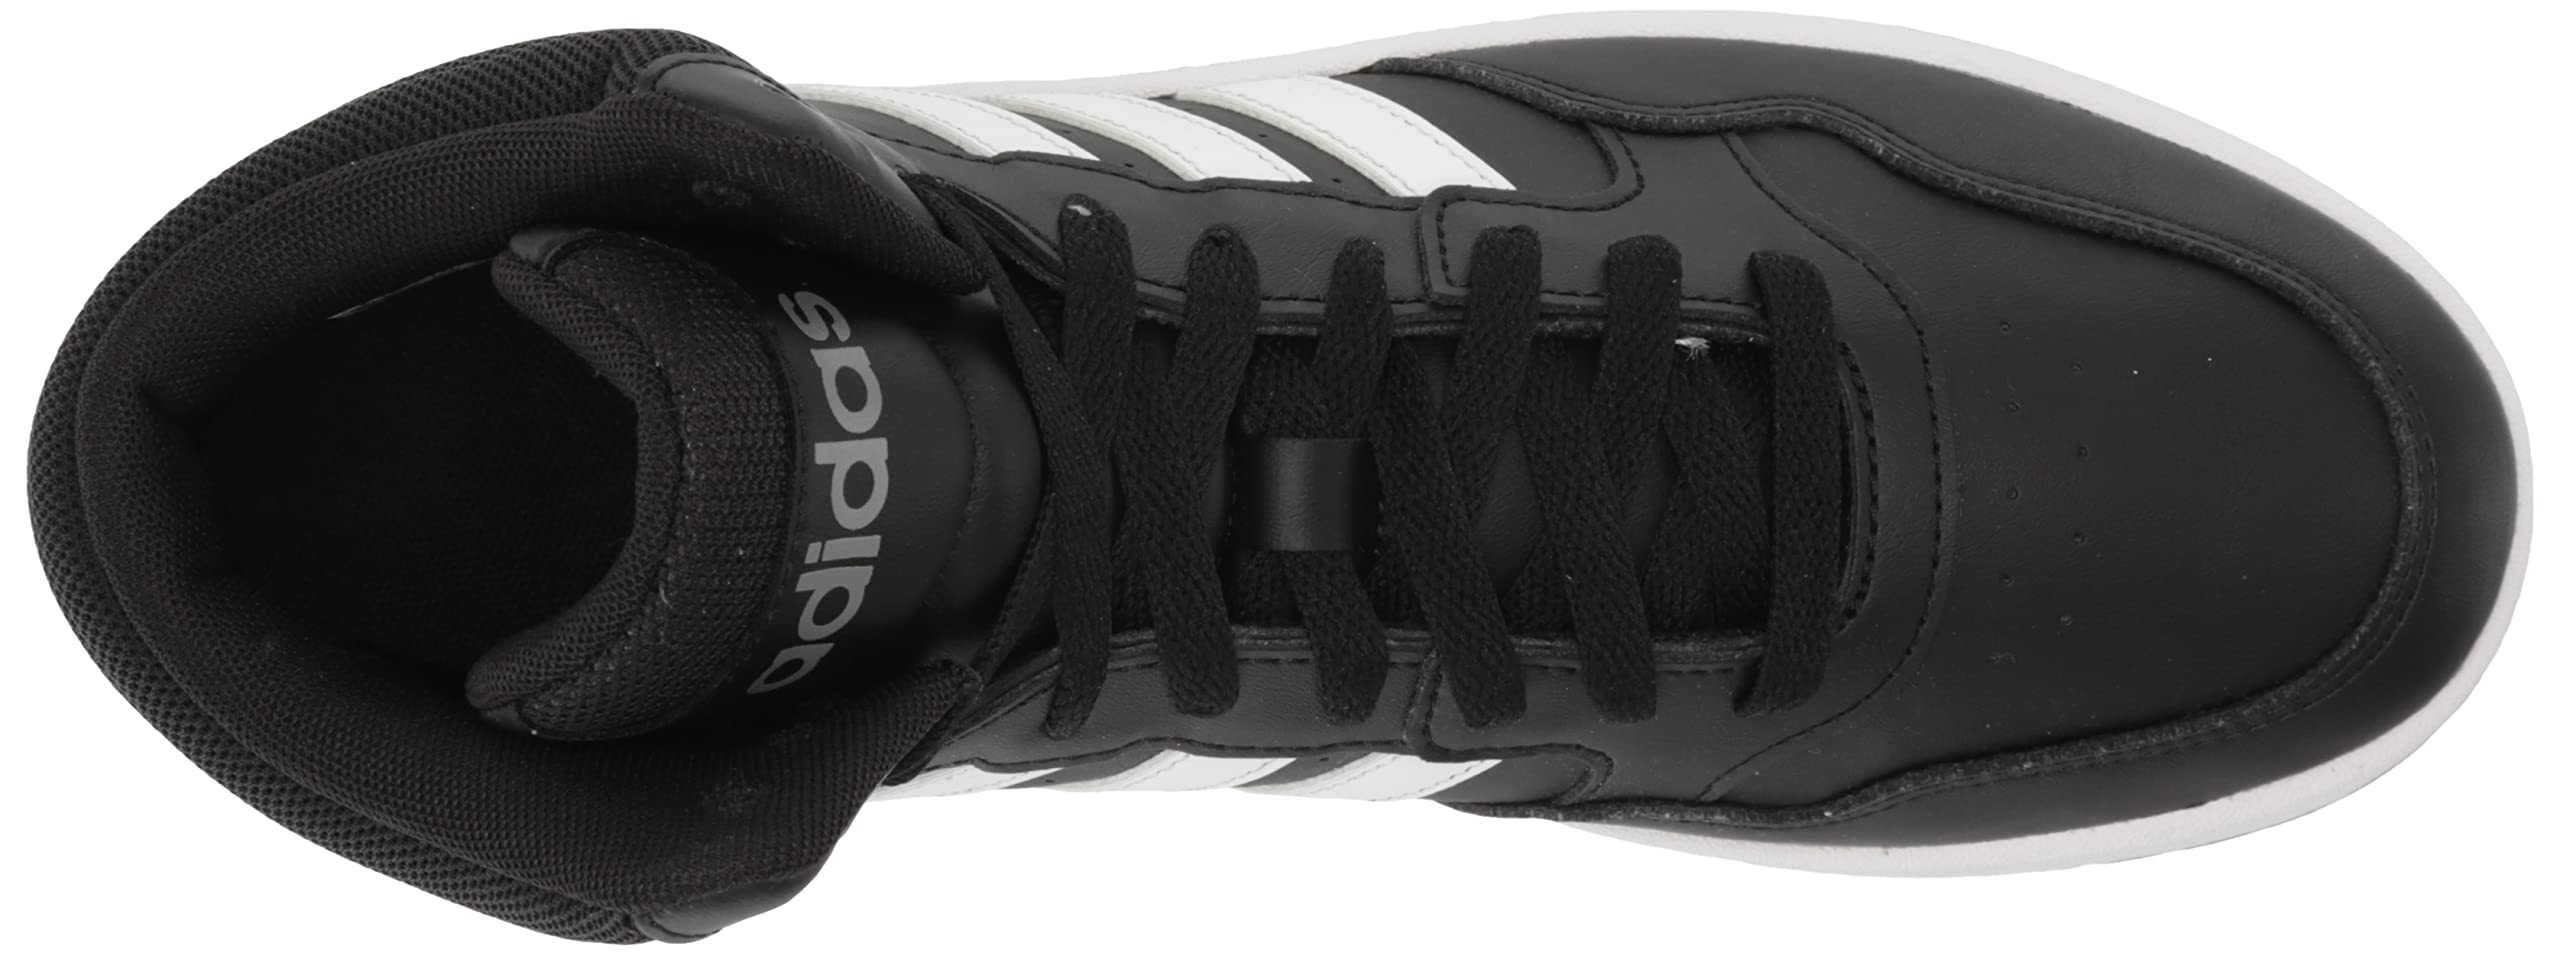 adidas Unisex-Child Hoops 3.0 Mid Basketball Shoe